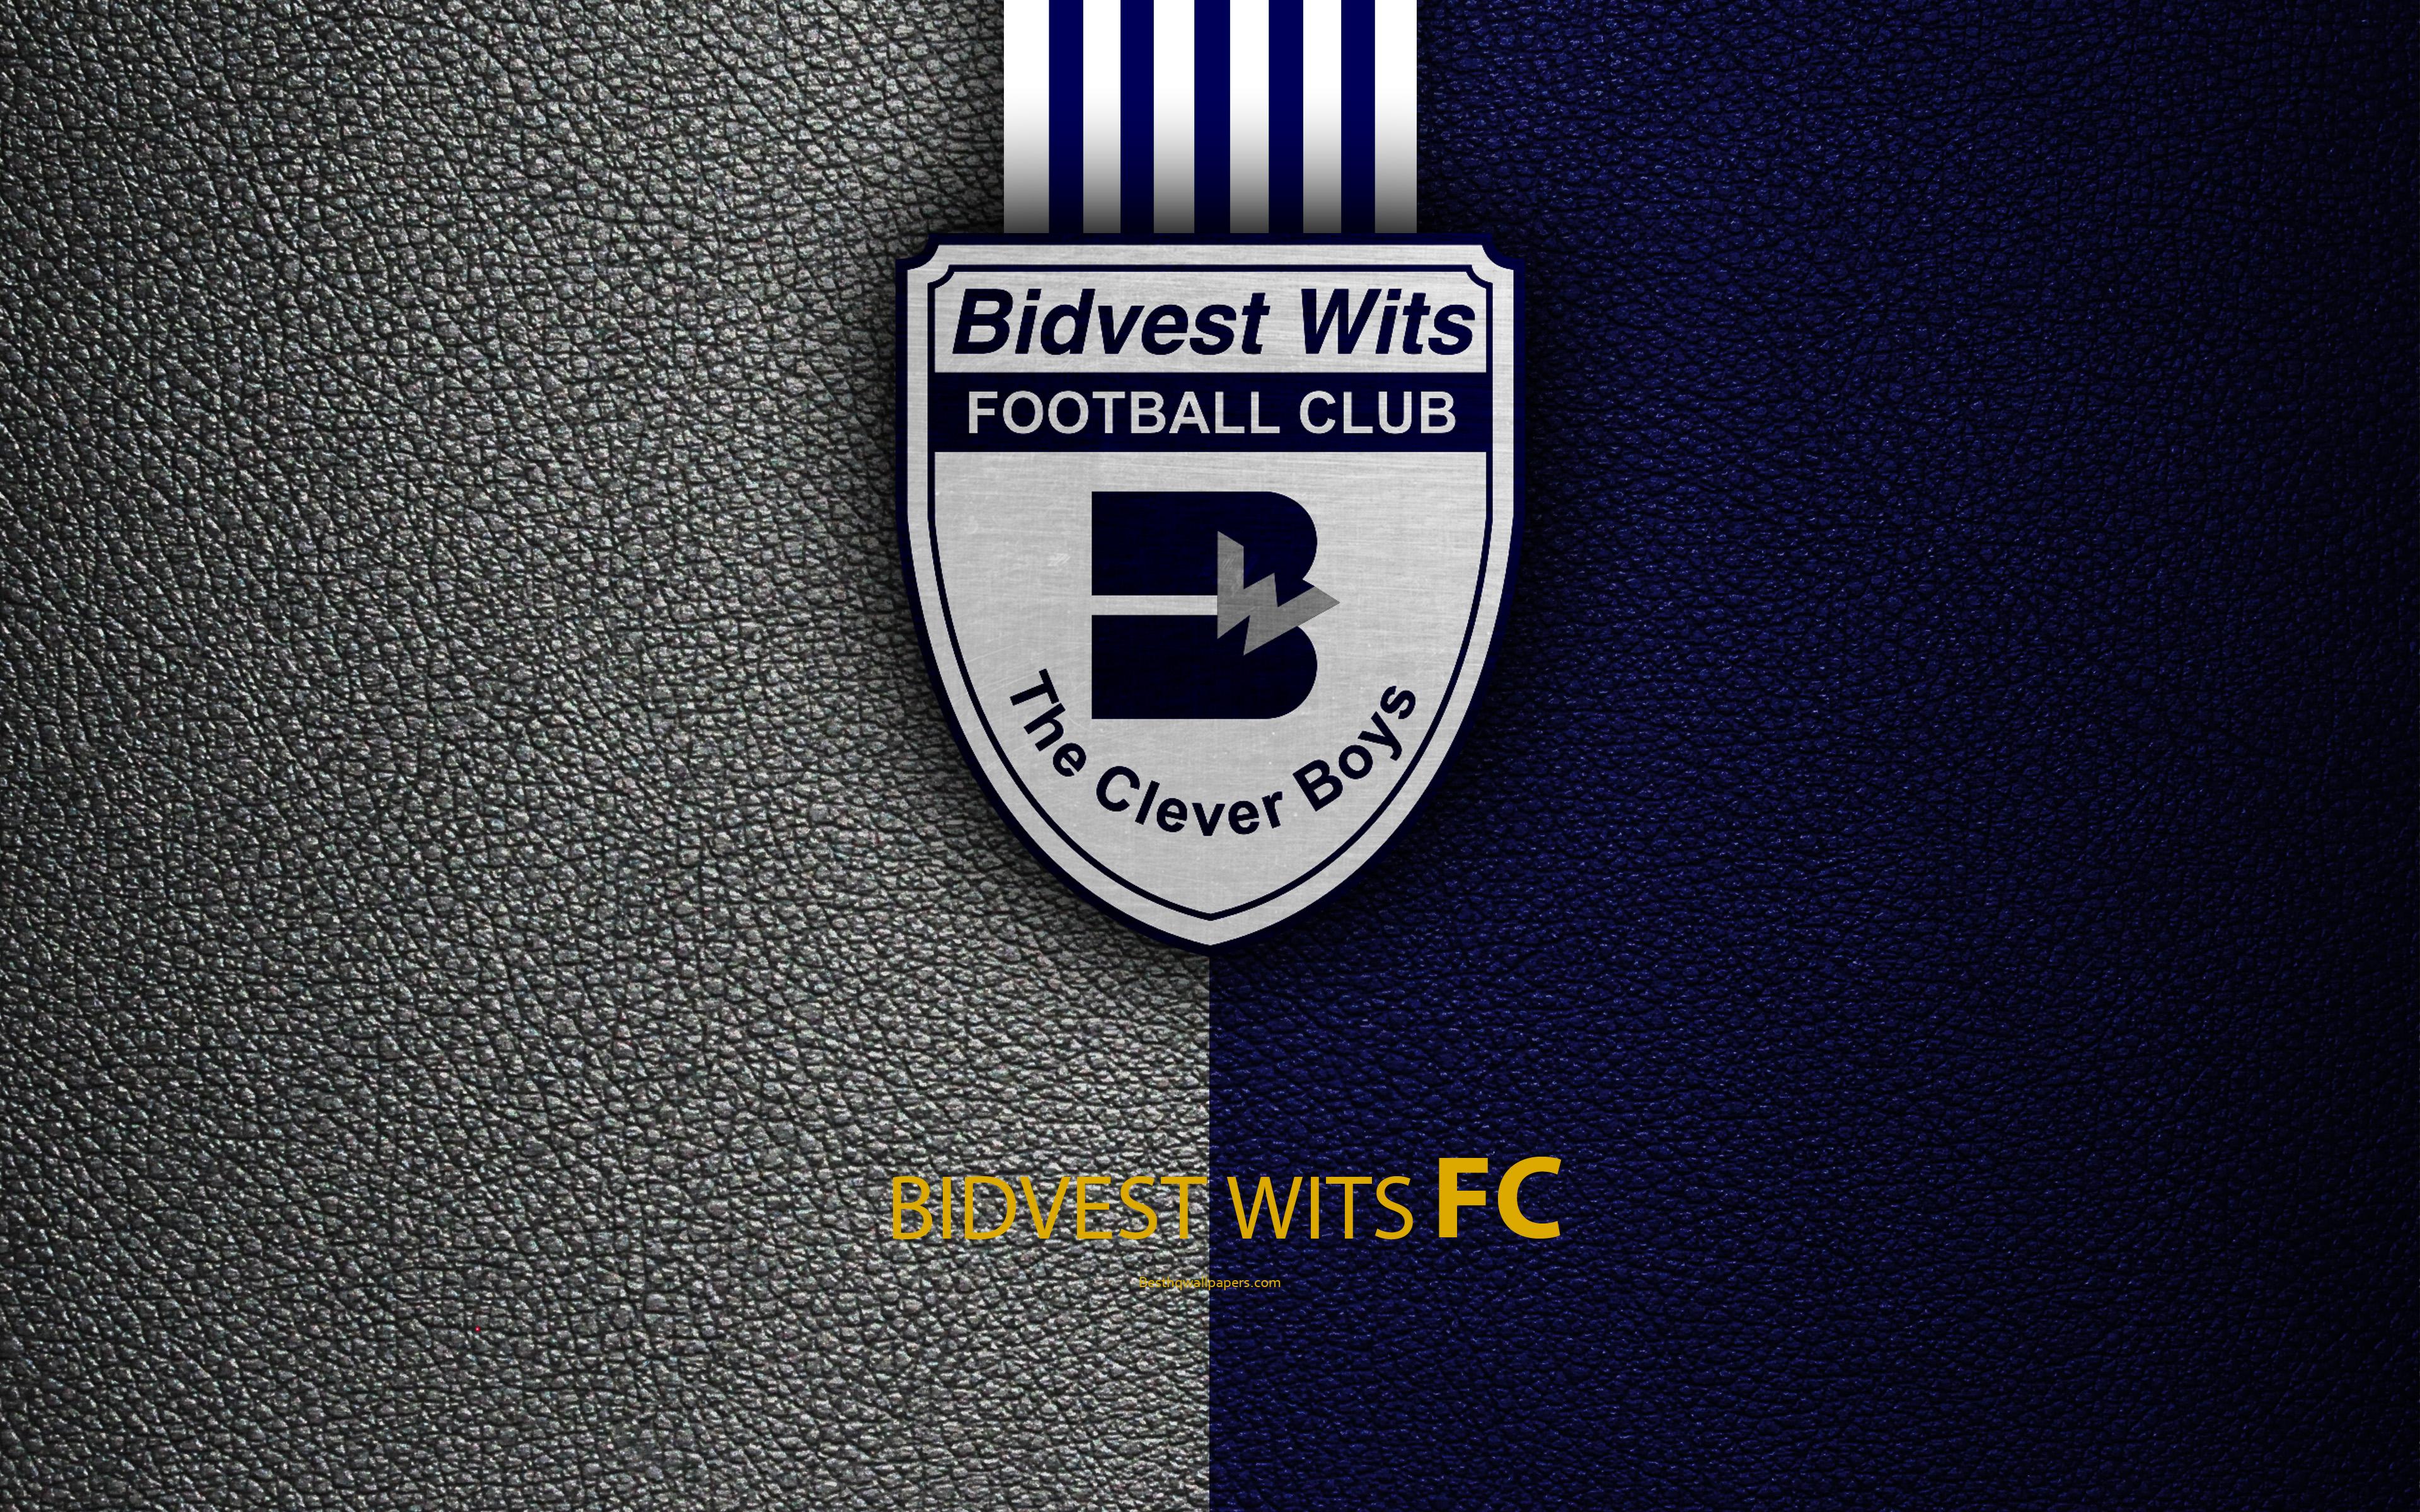 Download wallpaper Bidvest Wits FC, 4k, leather texture, logo